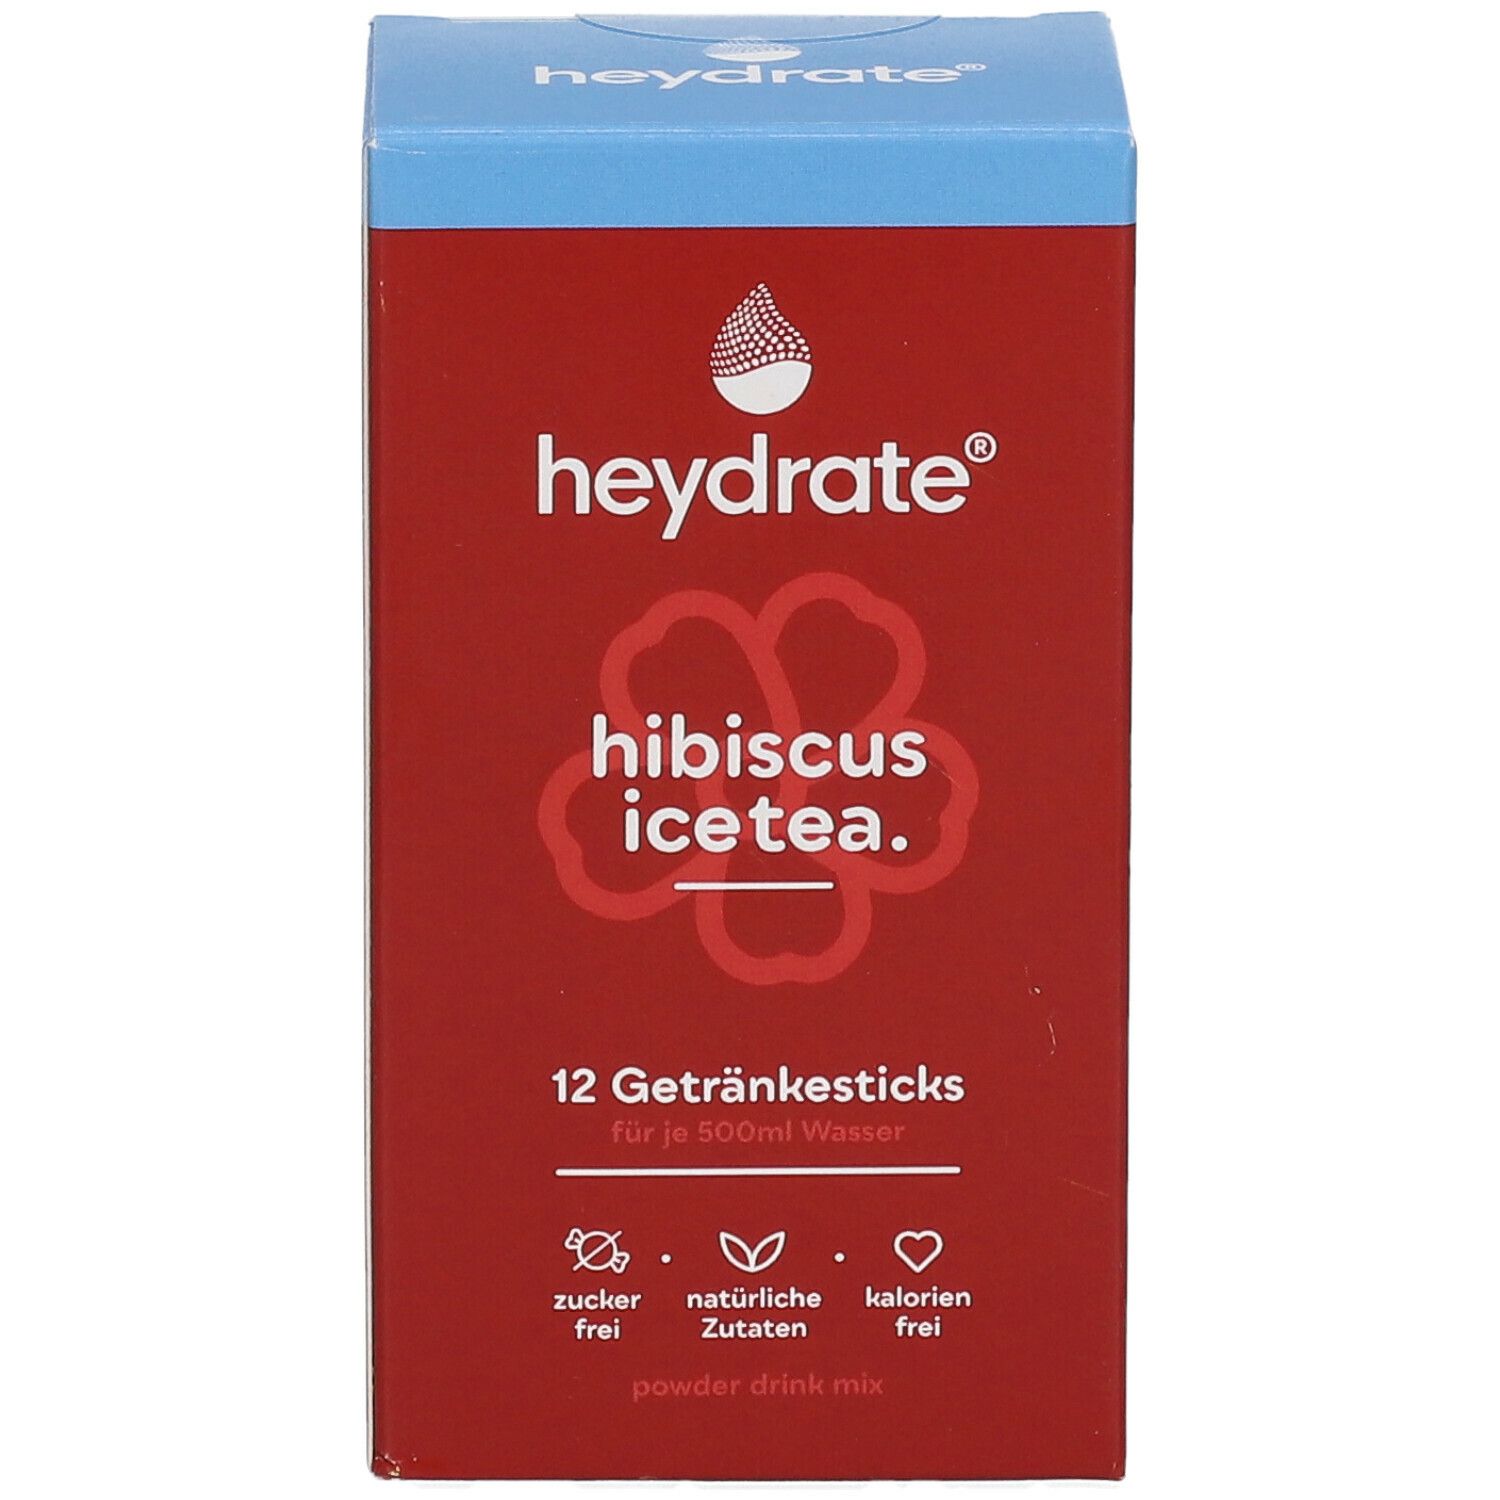 heydrate® hibiscus icetea